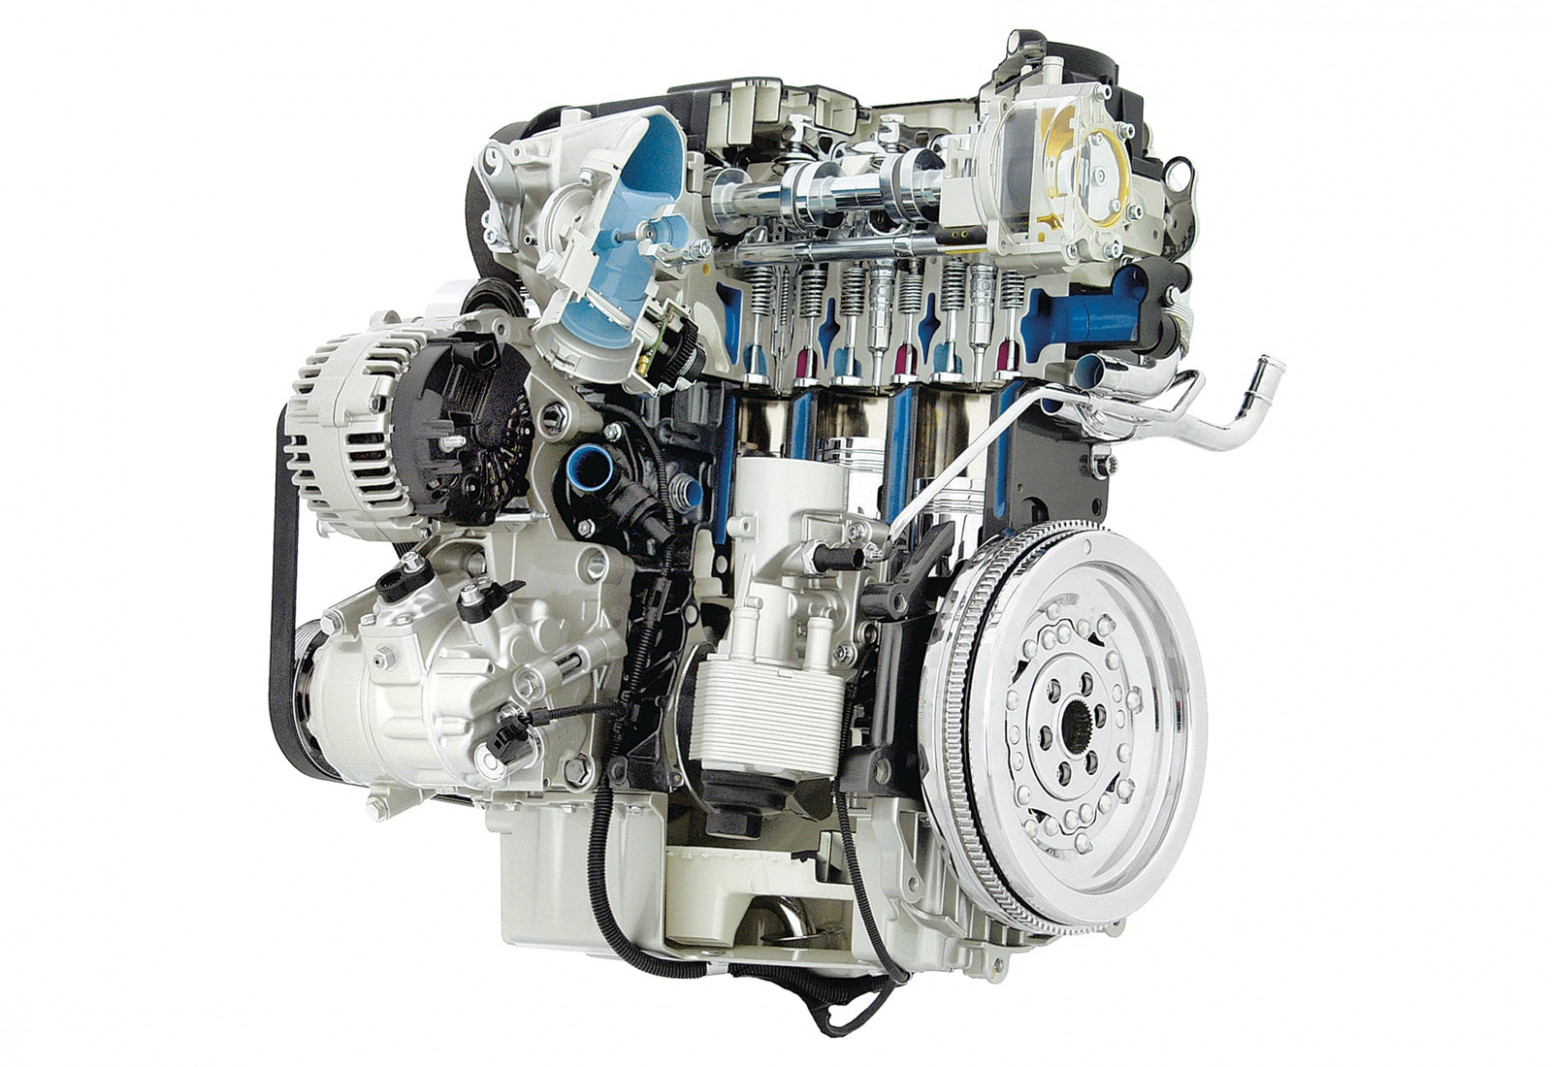 Exterior and Interior vw 2.0 tdi engine specs